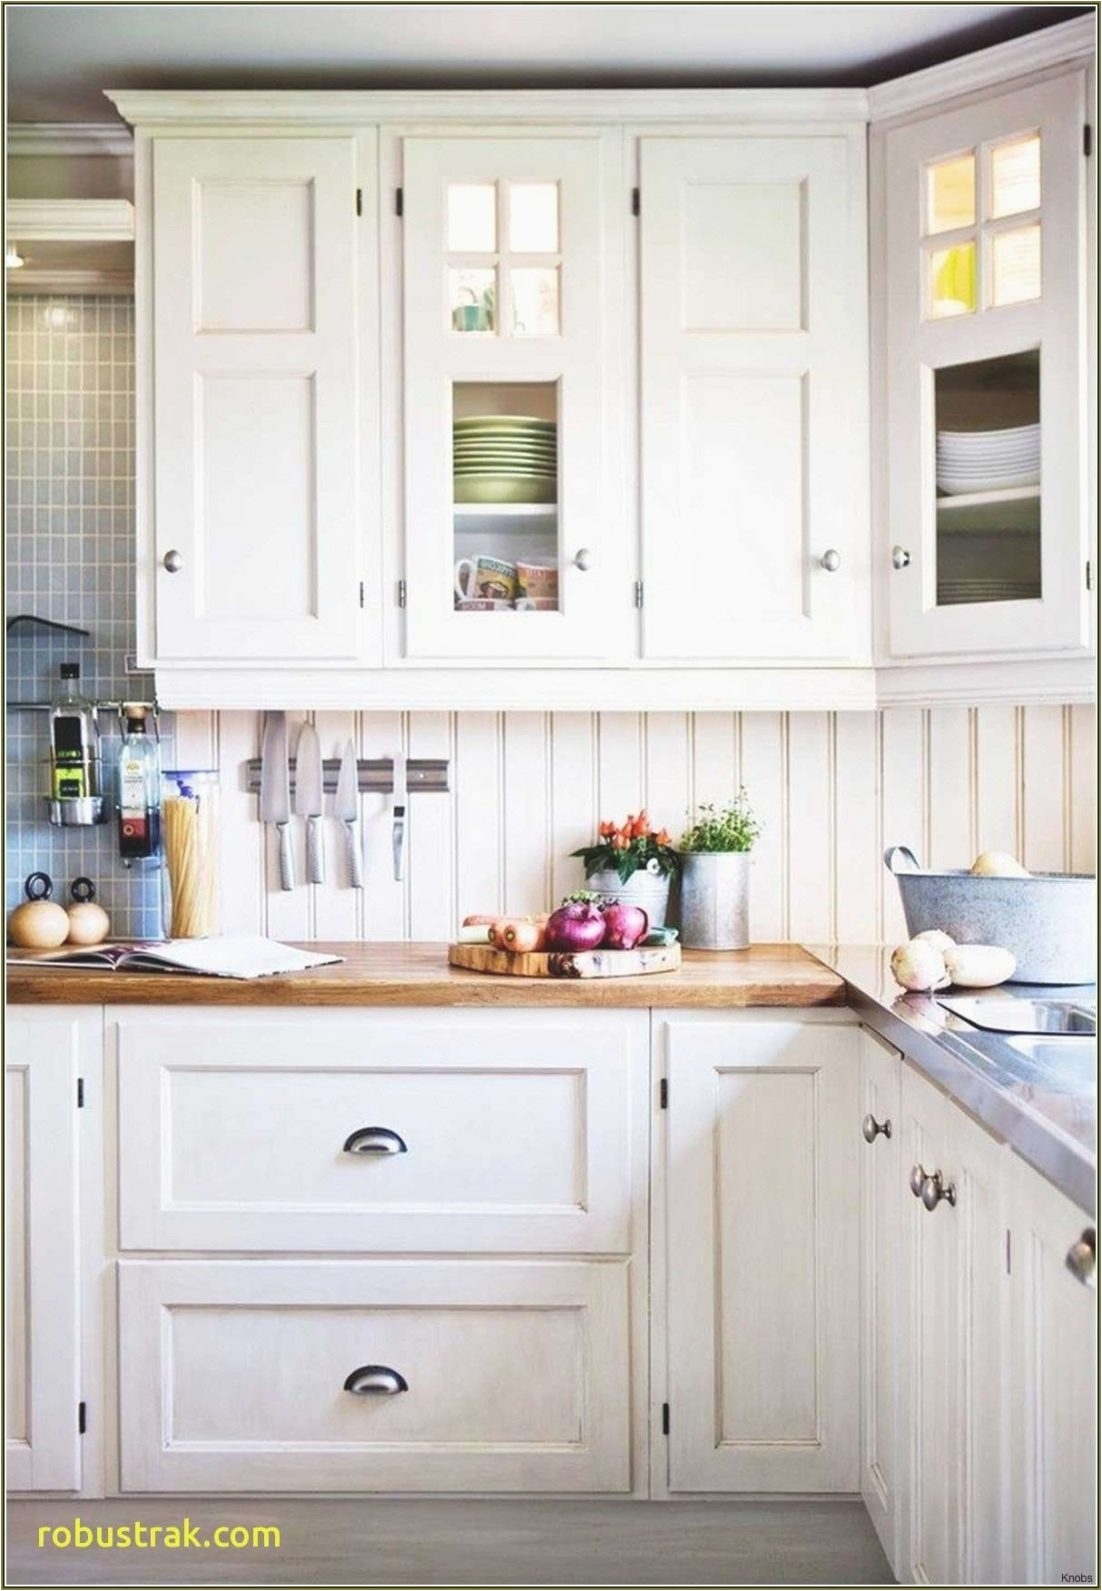 Kitchen Hardware Ideas 29 Unique Kitchen Cabinets Door Handles Pics Home Ideas Ikea